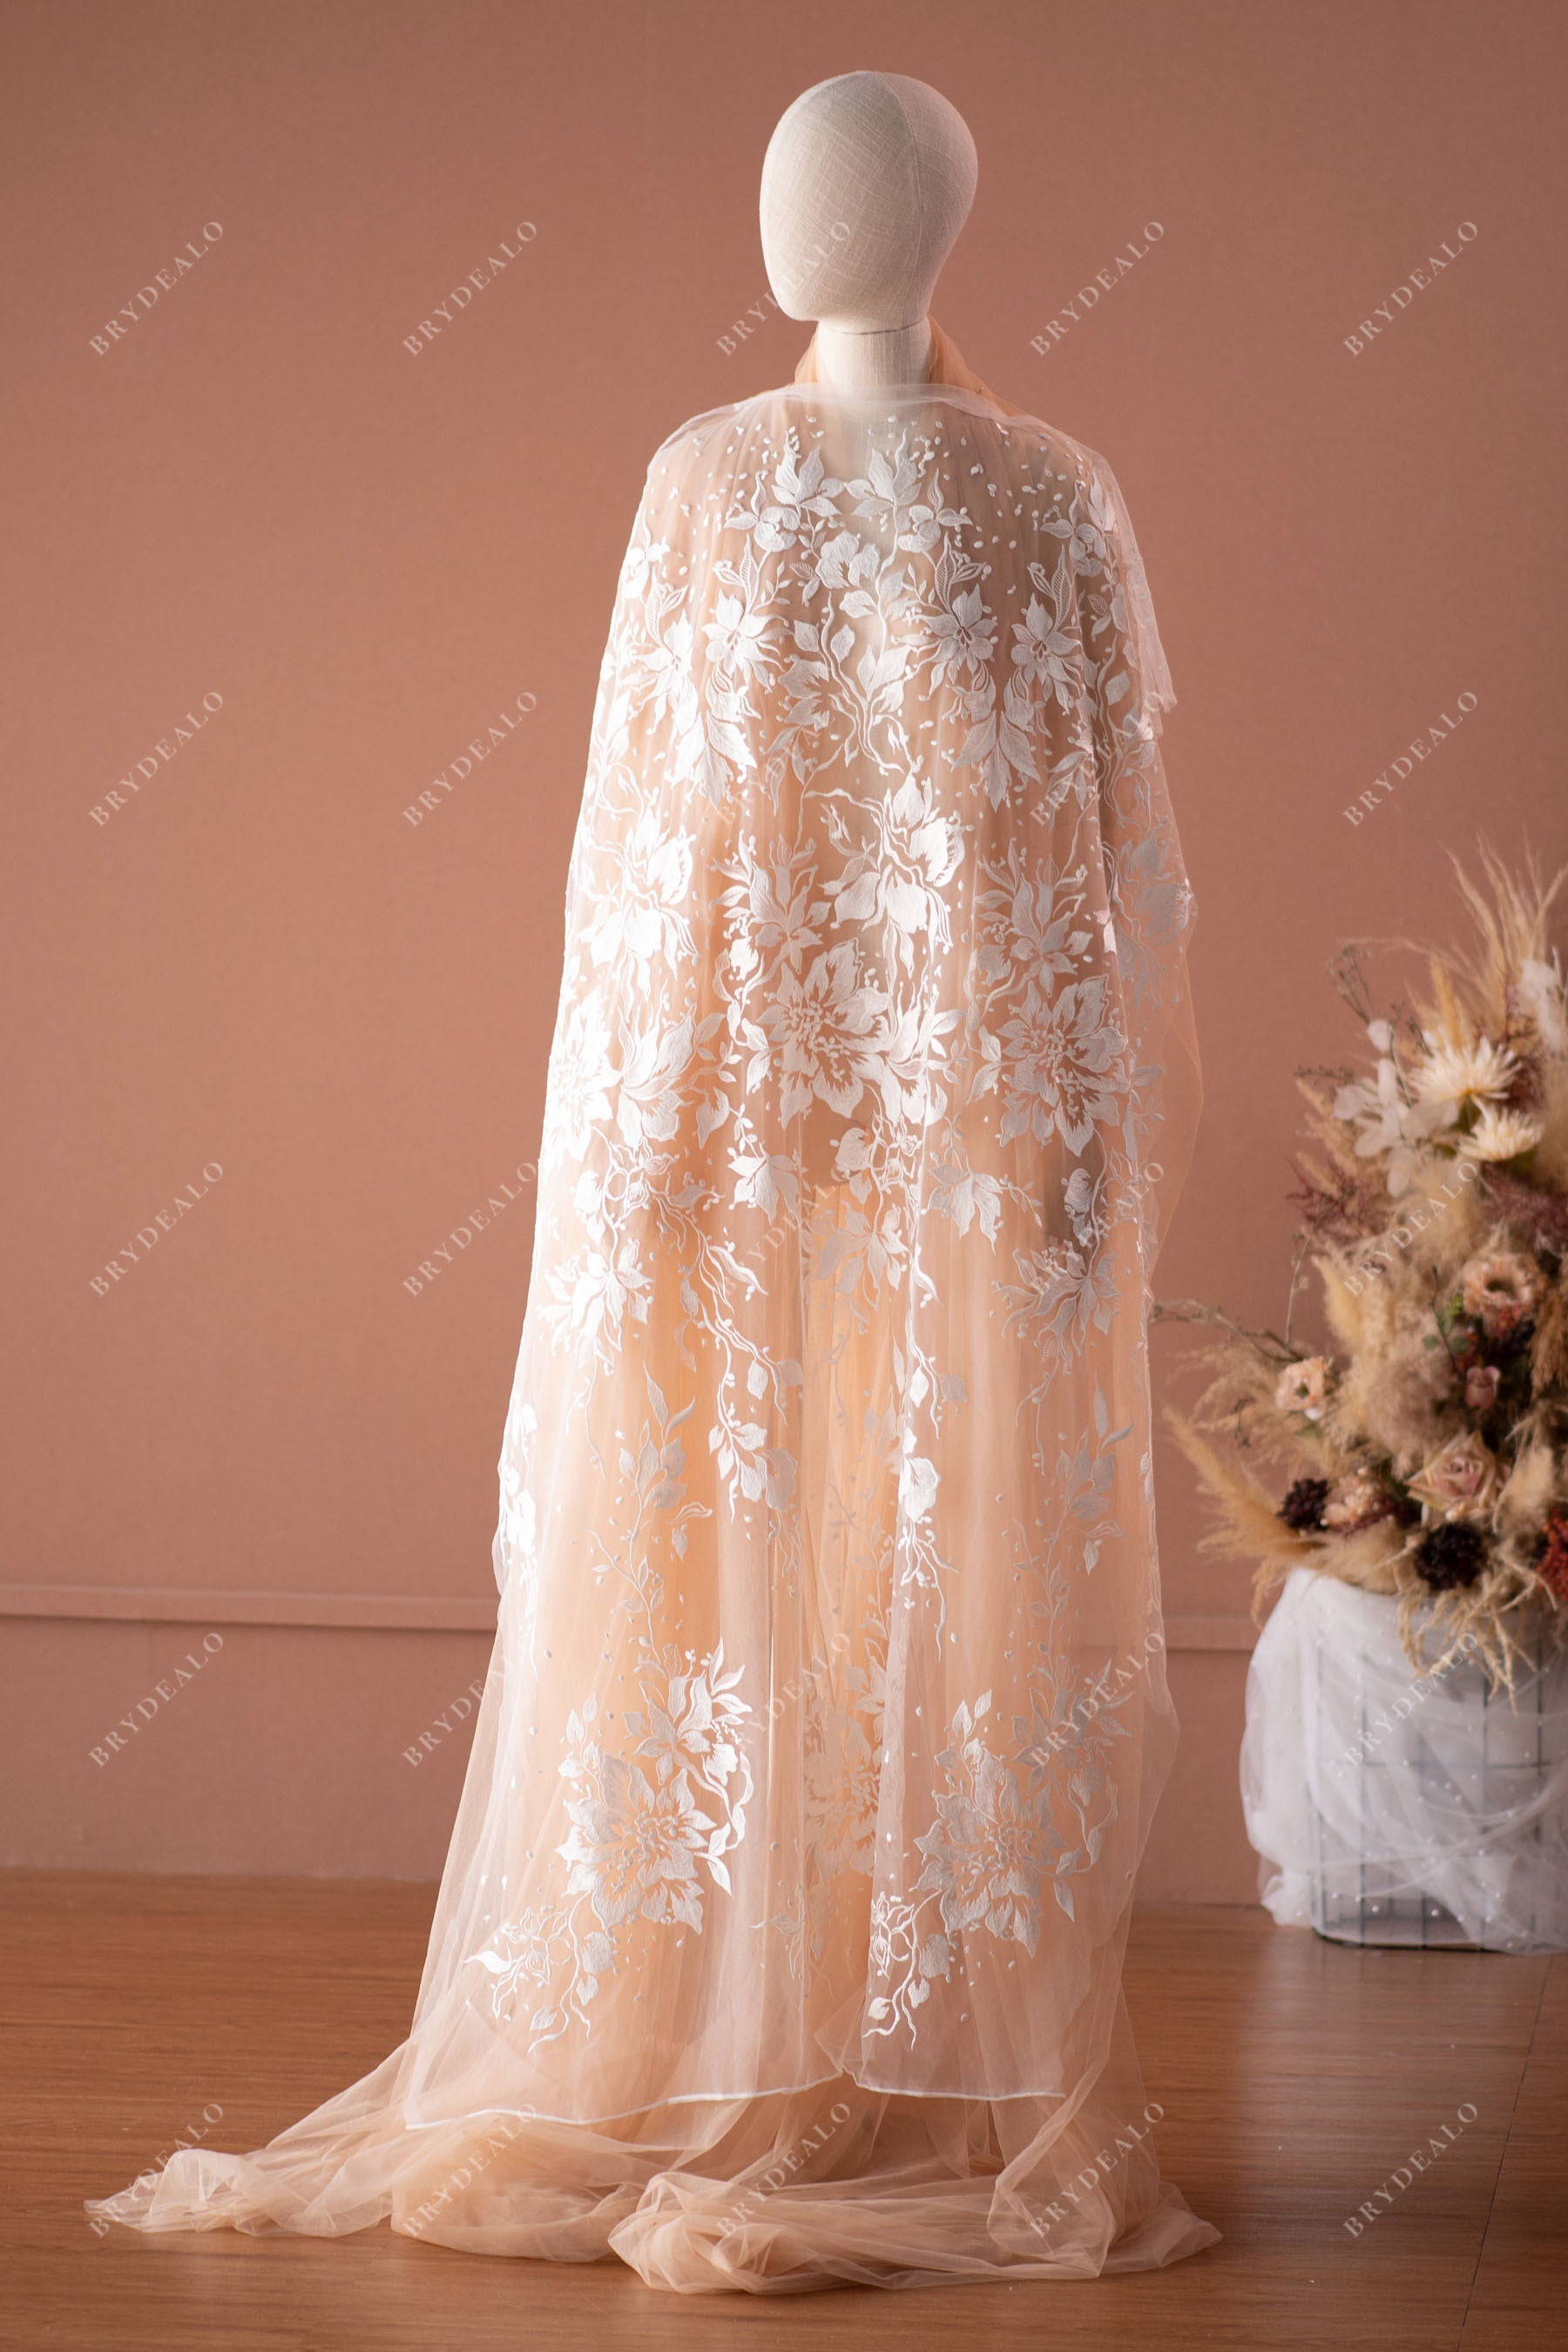 designer wedding dress flower lace fabric by the yard